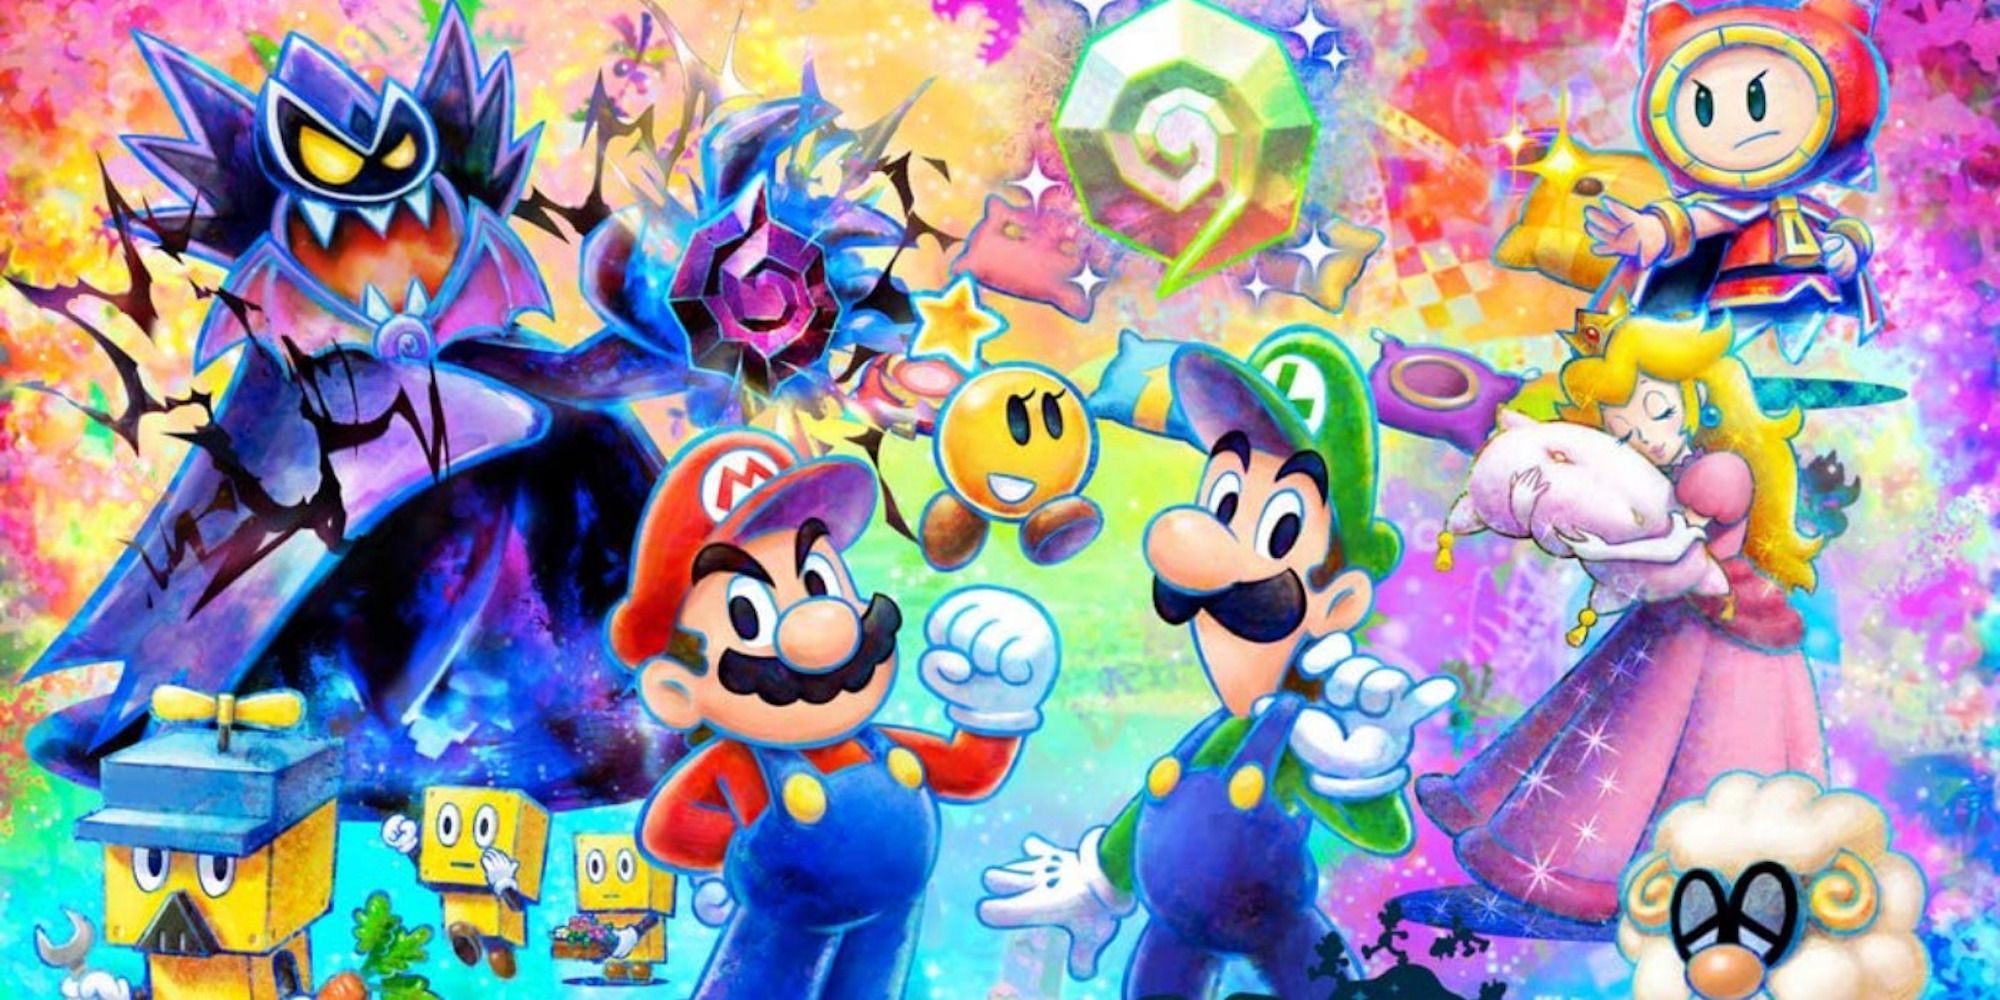 Mario & Luigi Dream Team - Mario, Luigi, Peach, and Starlow In The Dream World With The Supporting Cast